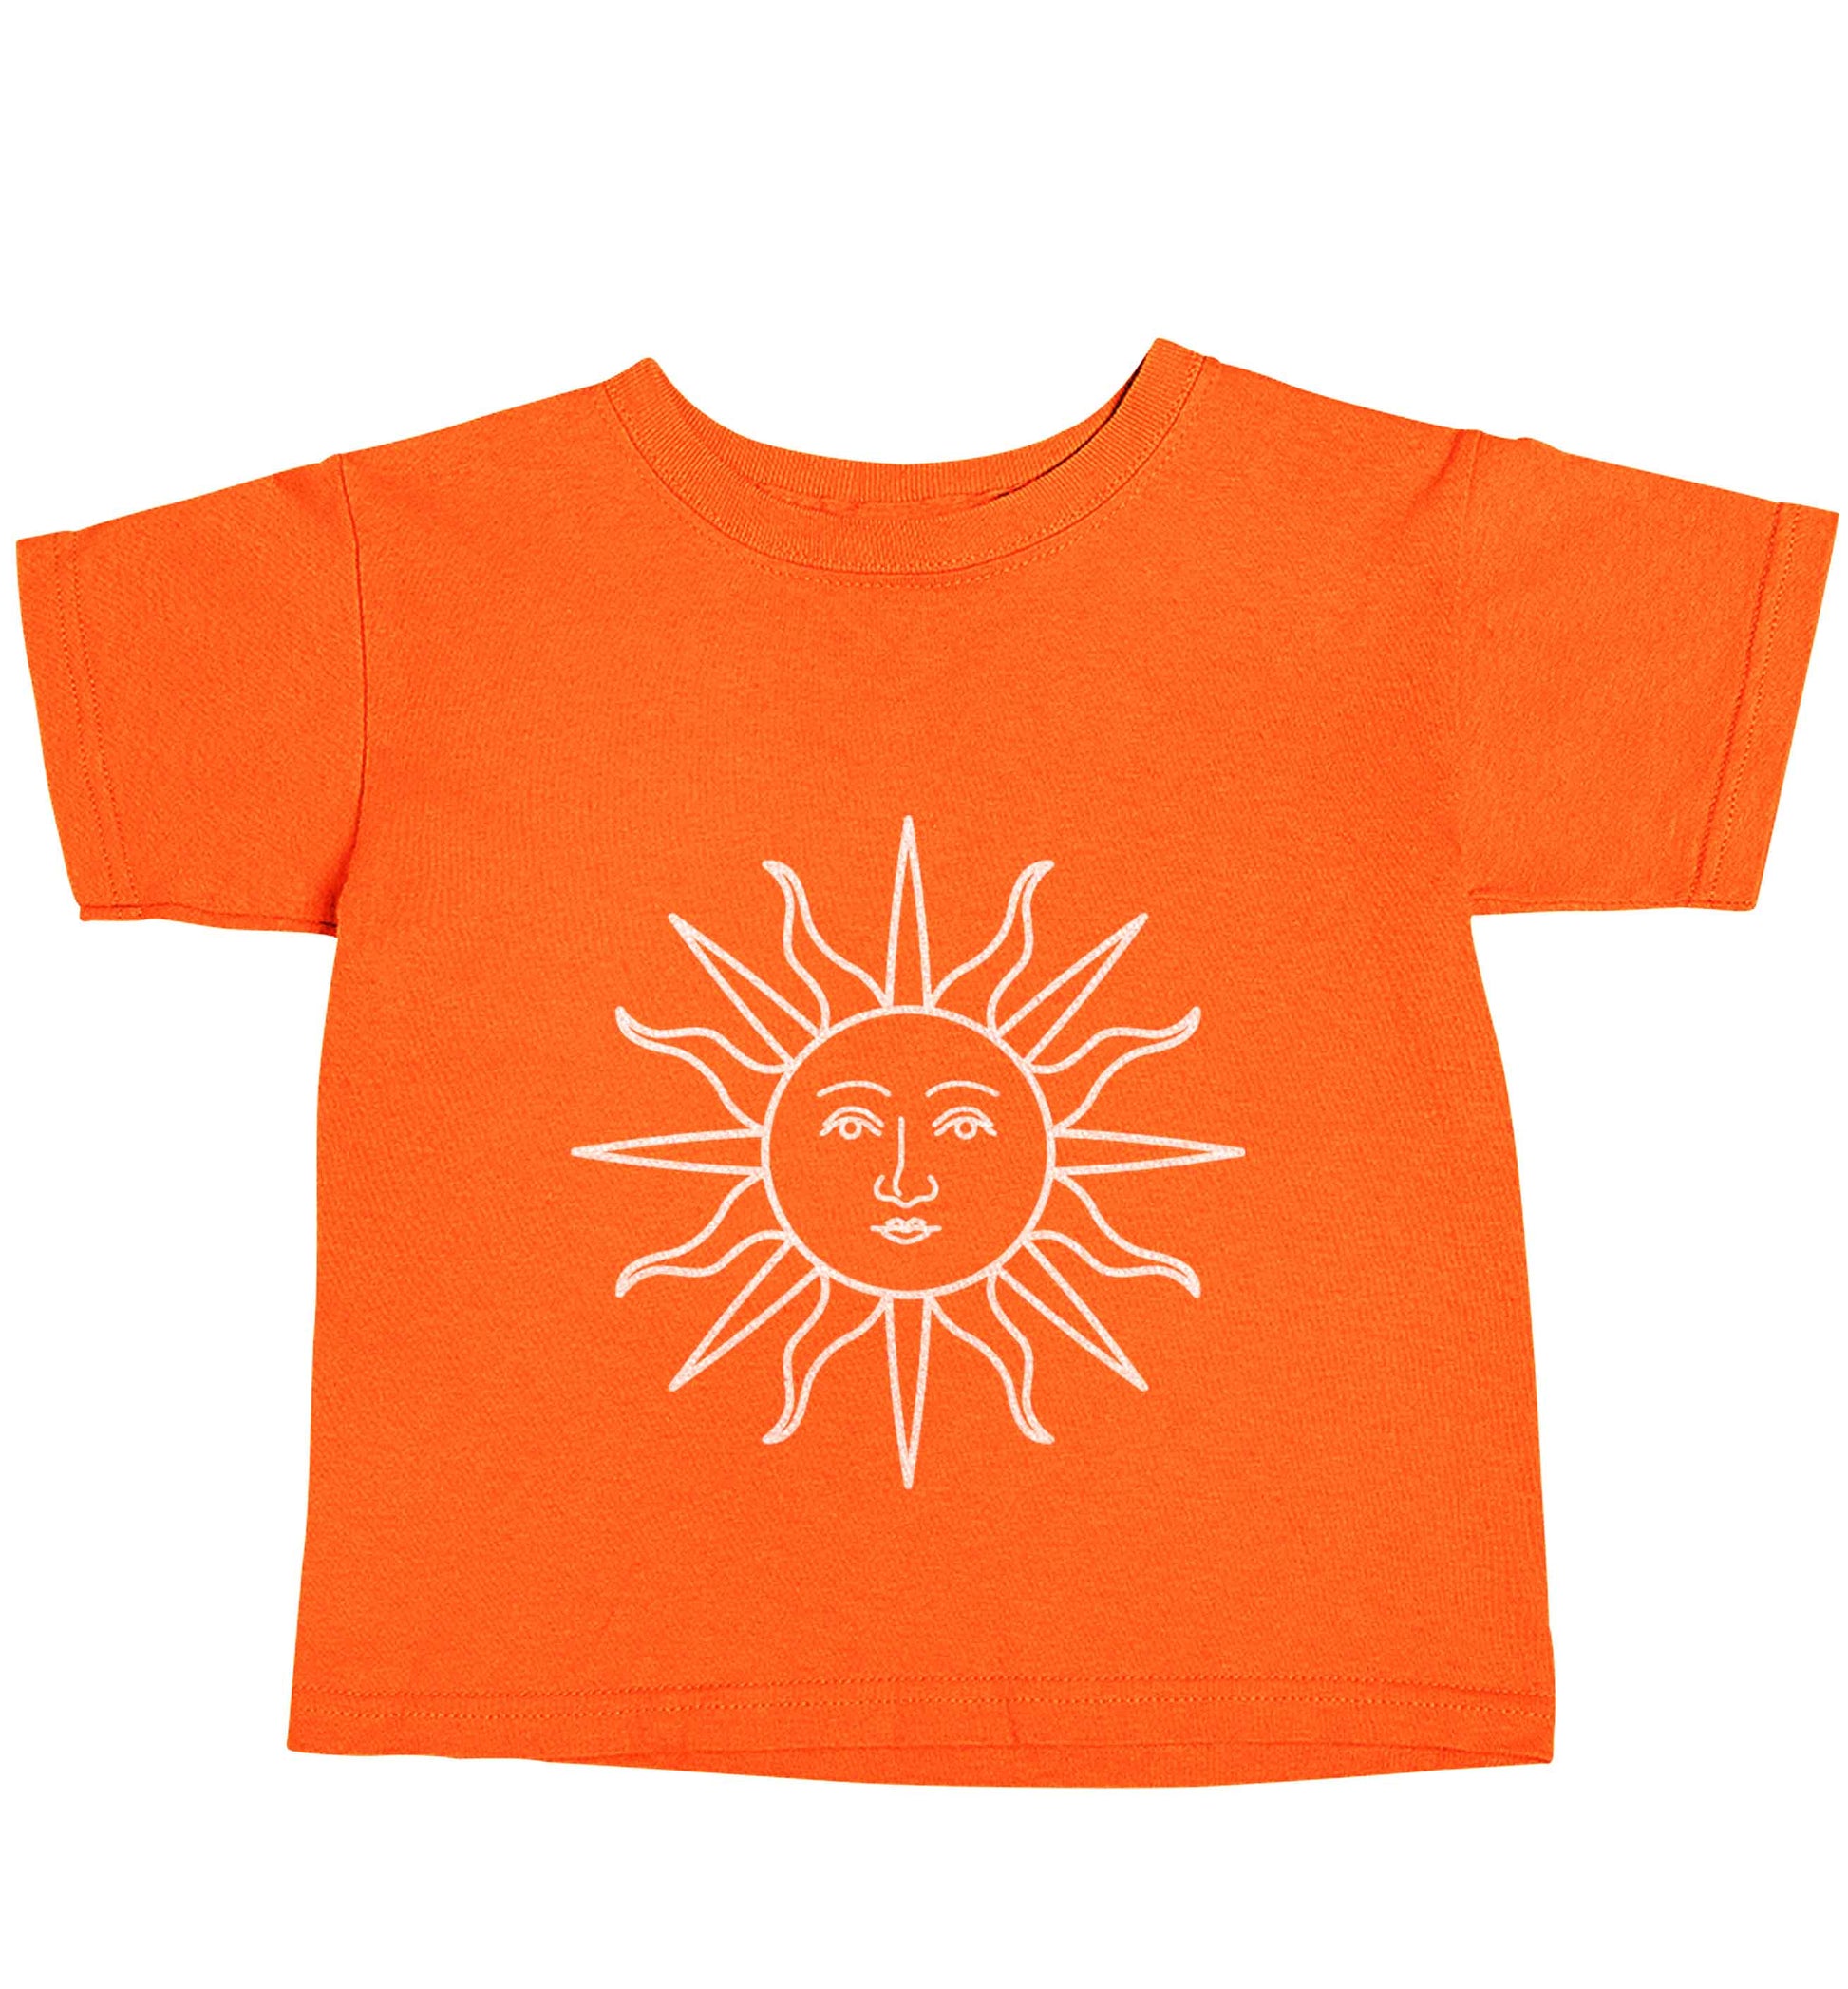 Sun face illustration orange baby toddler Tshirt 2 Years